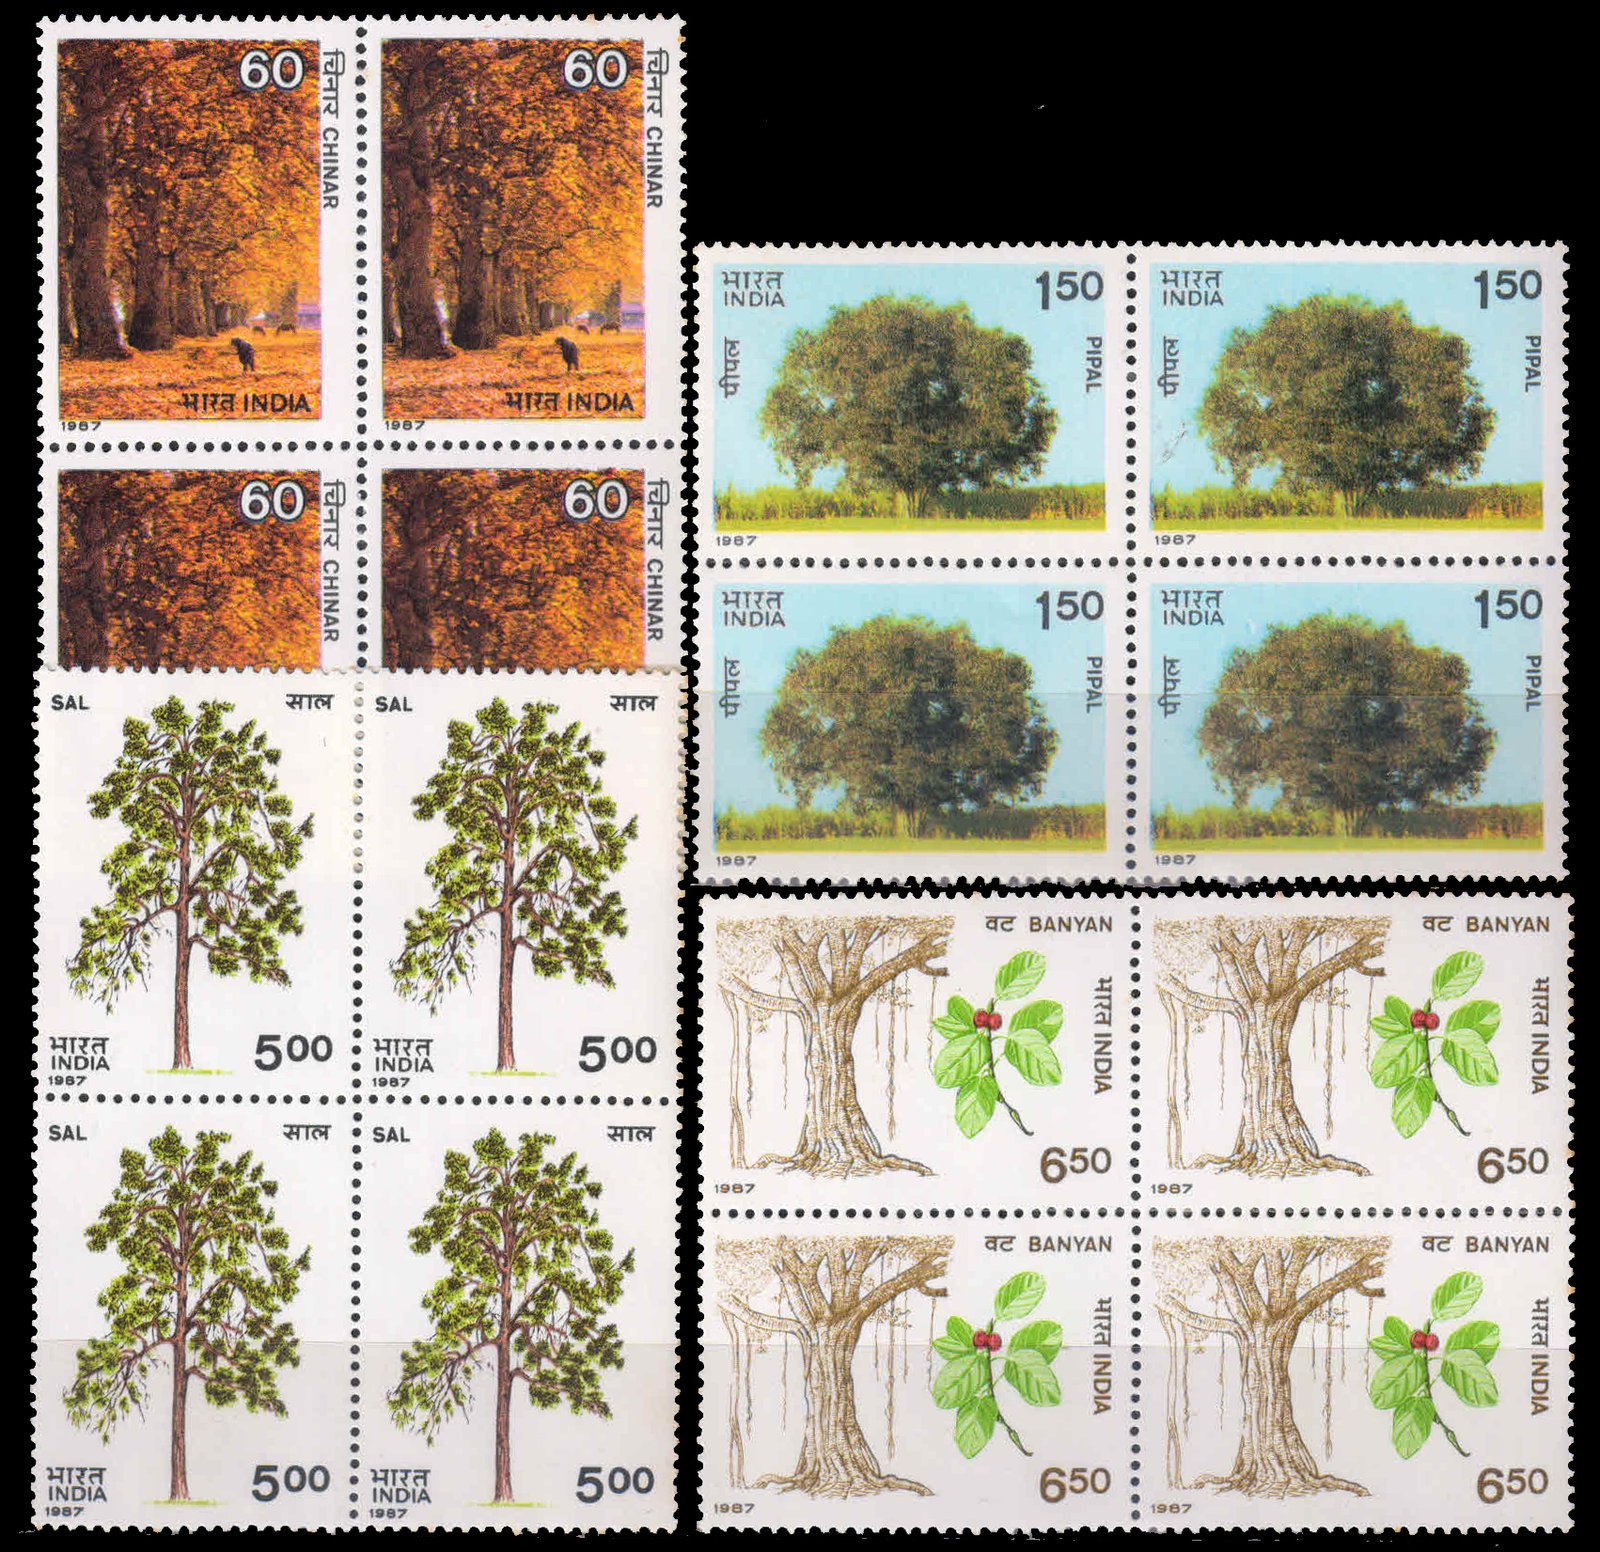 INDIA 1987-Indian Trees, Chinar, Pipal, Sal, Banyan, Set of 4 Blocks, MNH, S.G. 1271-1274-Cat £ 34-